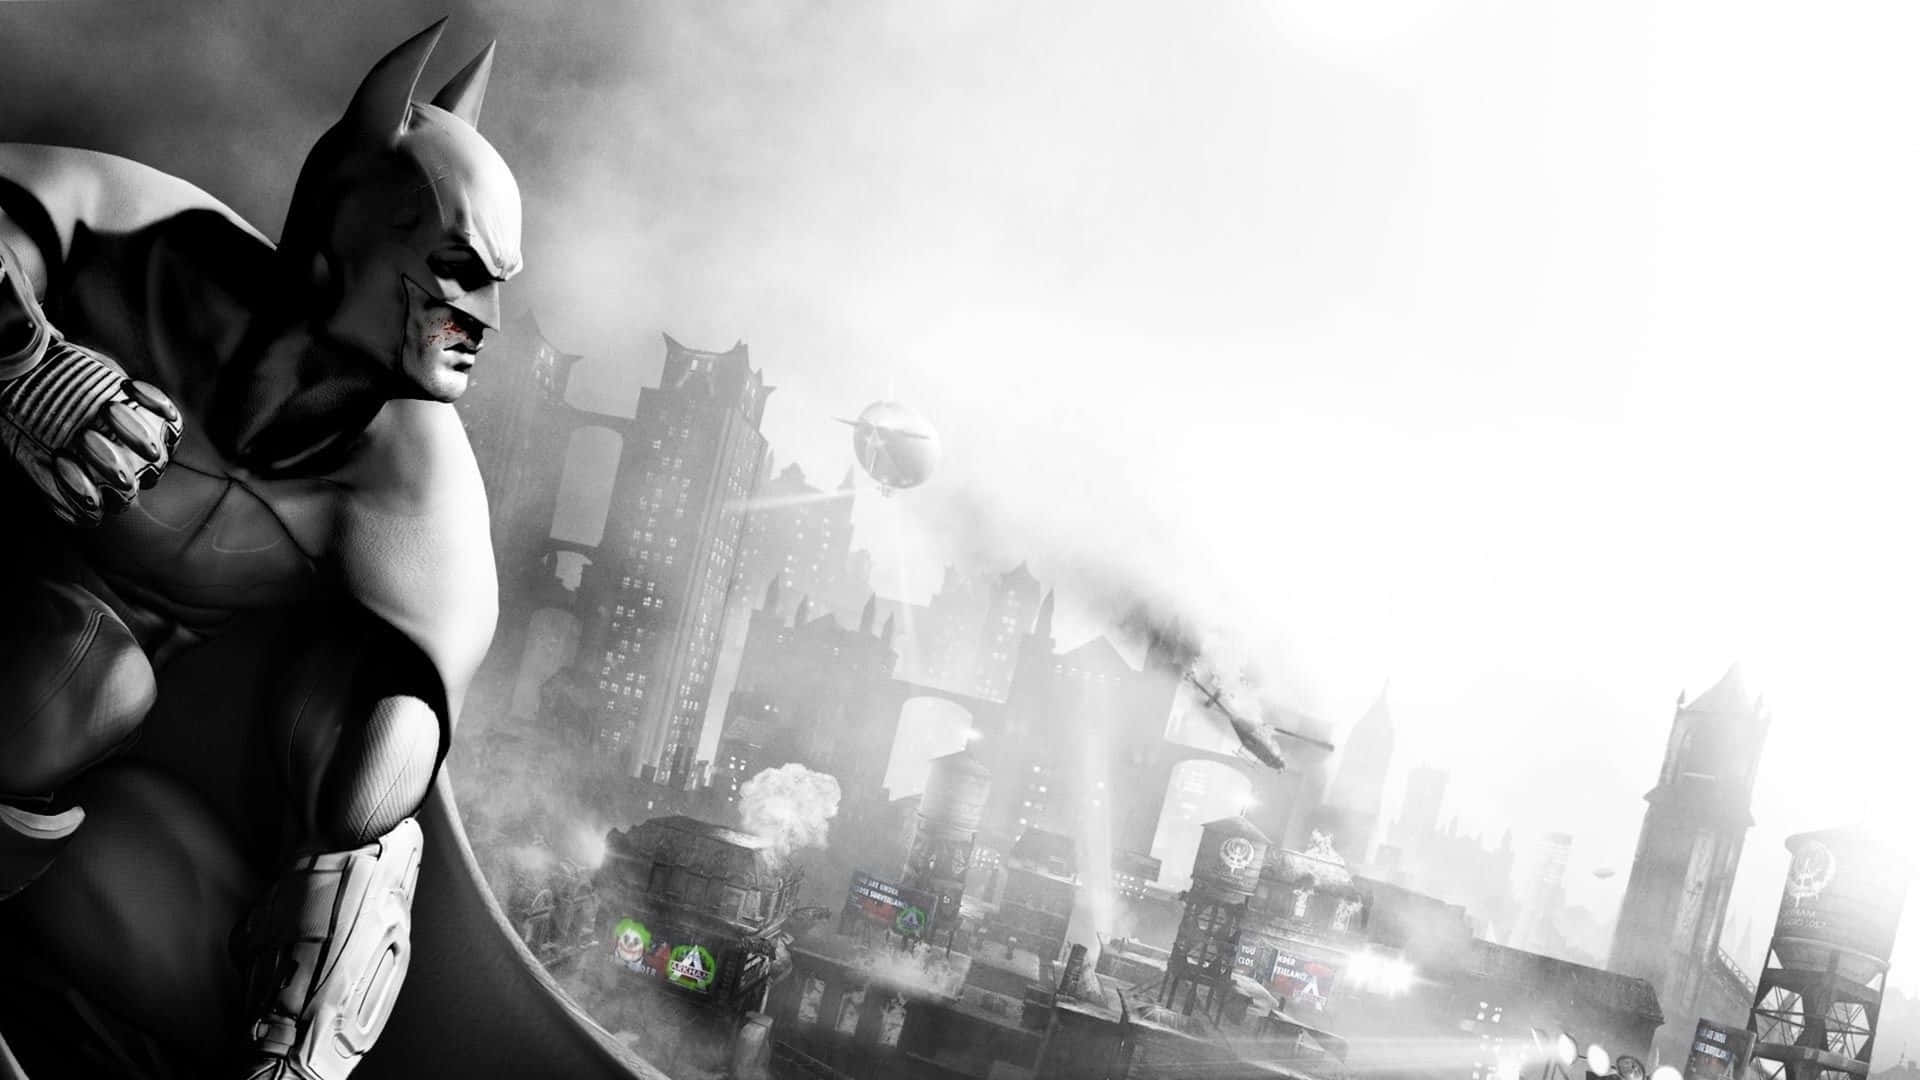 Batman returns in Arkham City